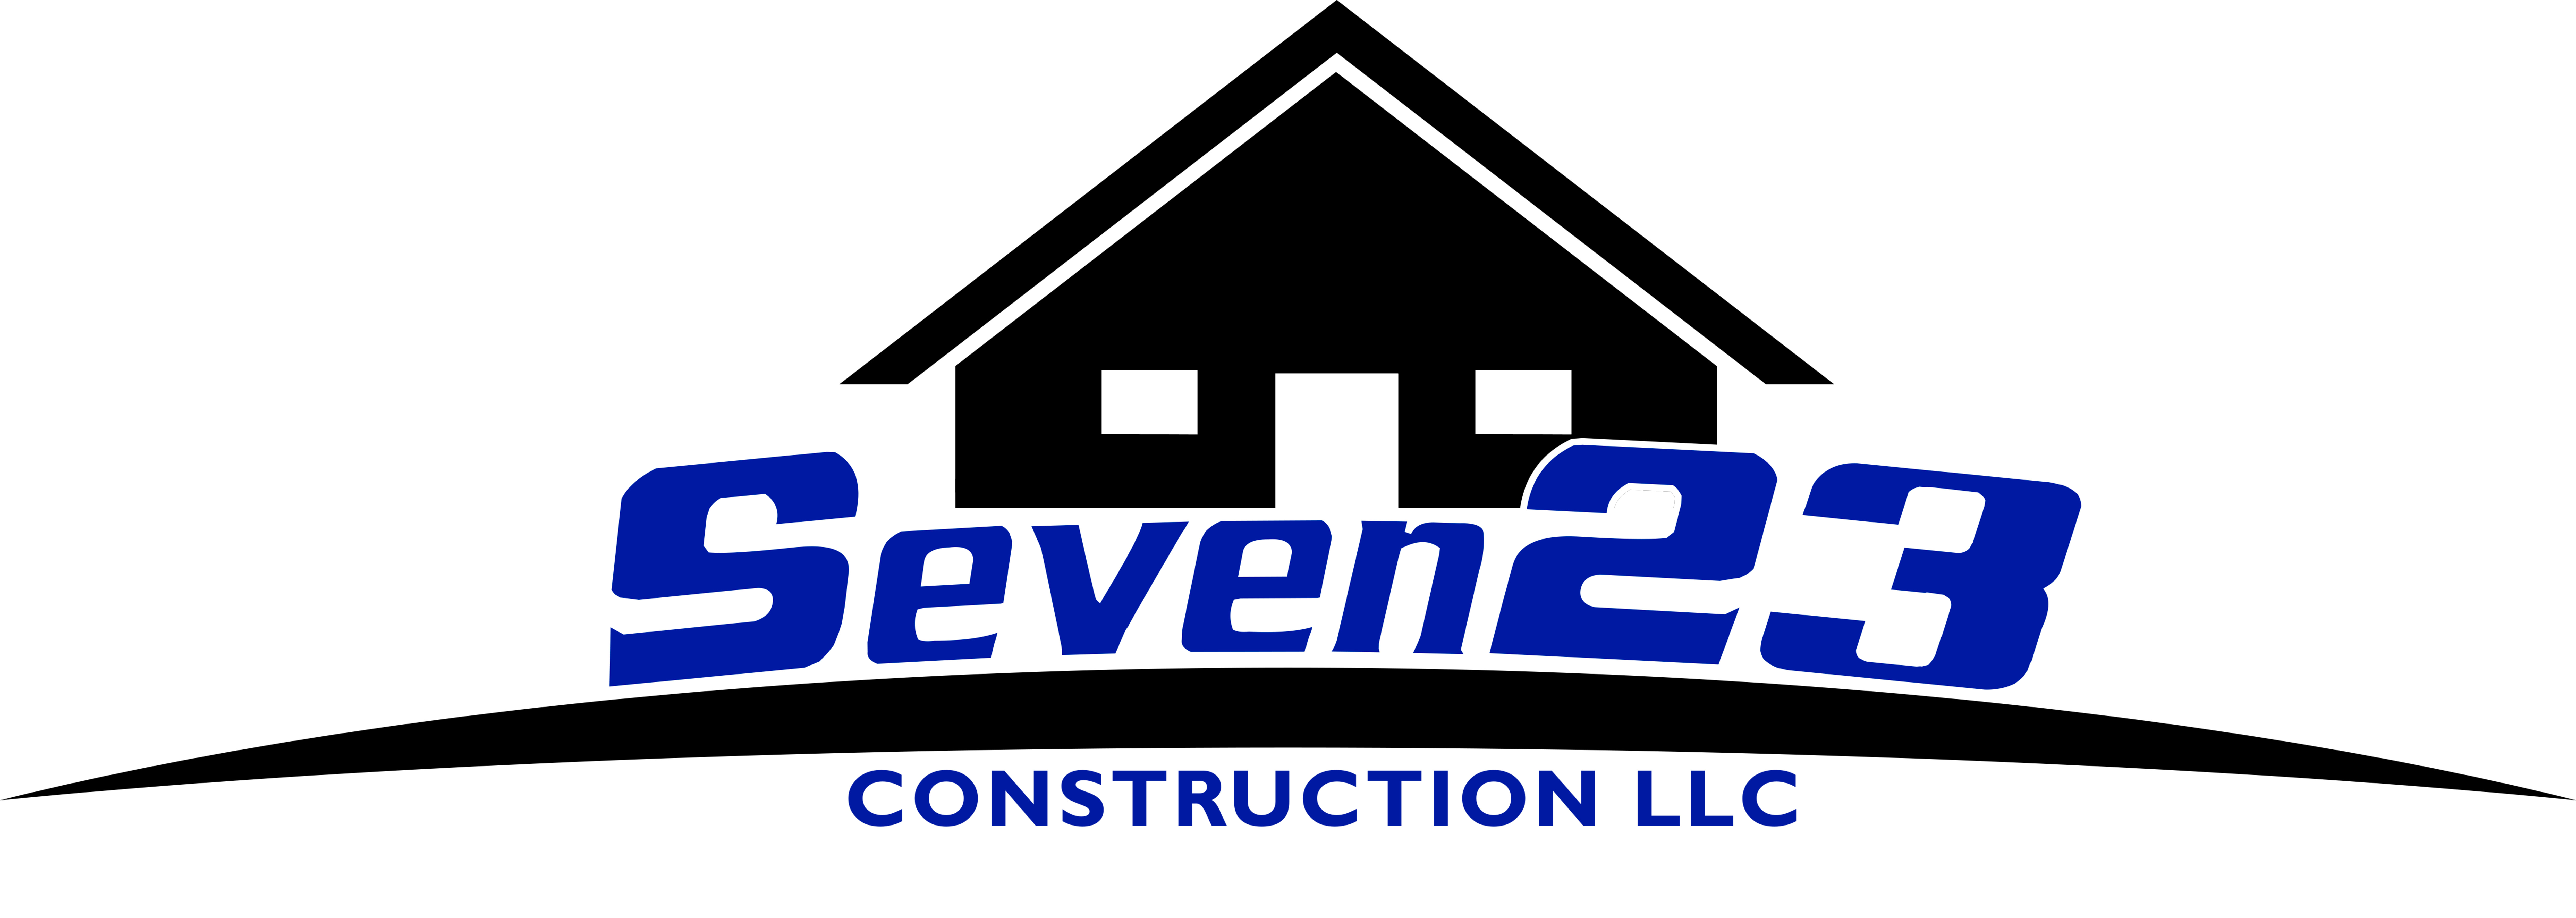 Seven23 Construction LLC Logo